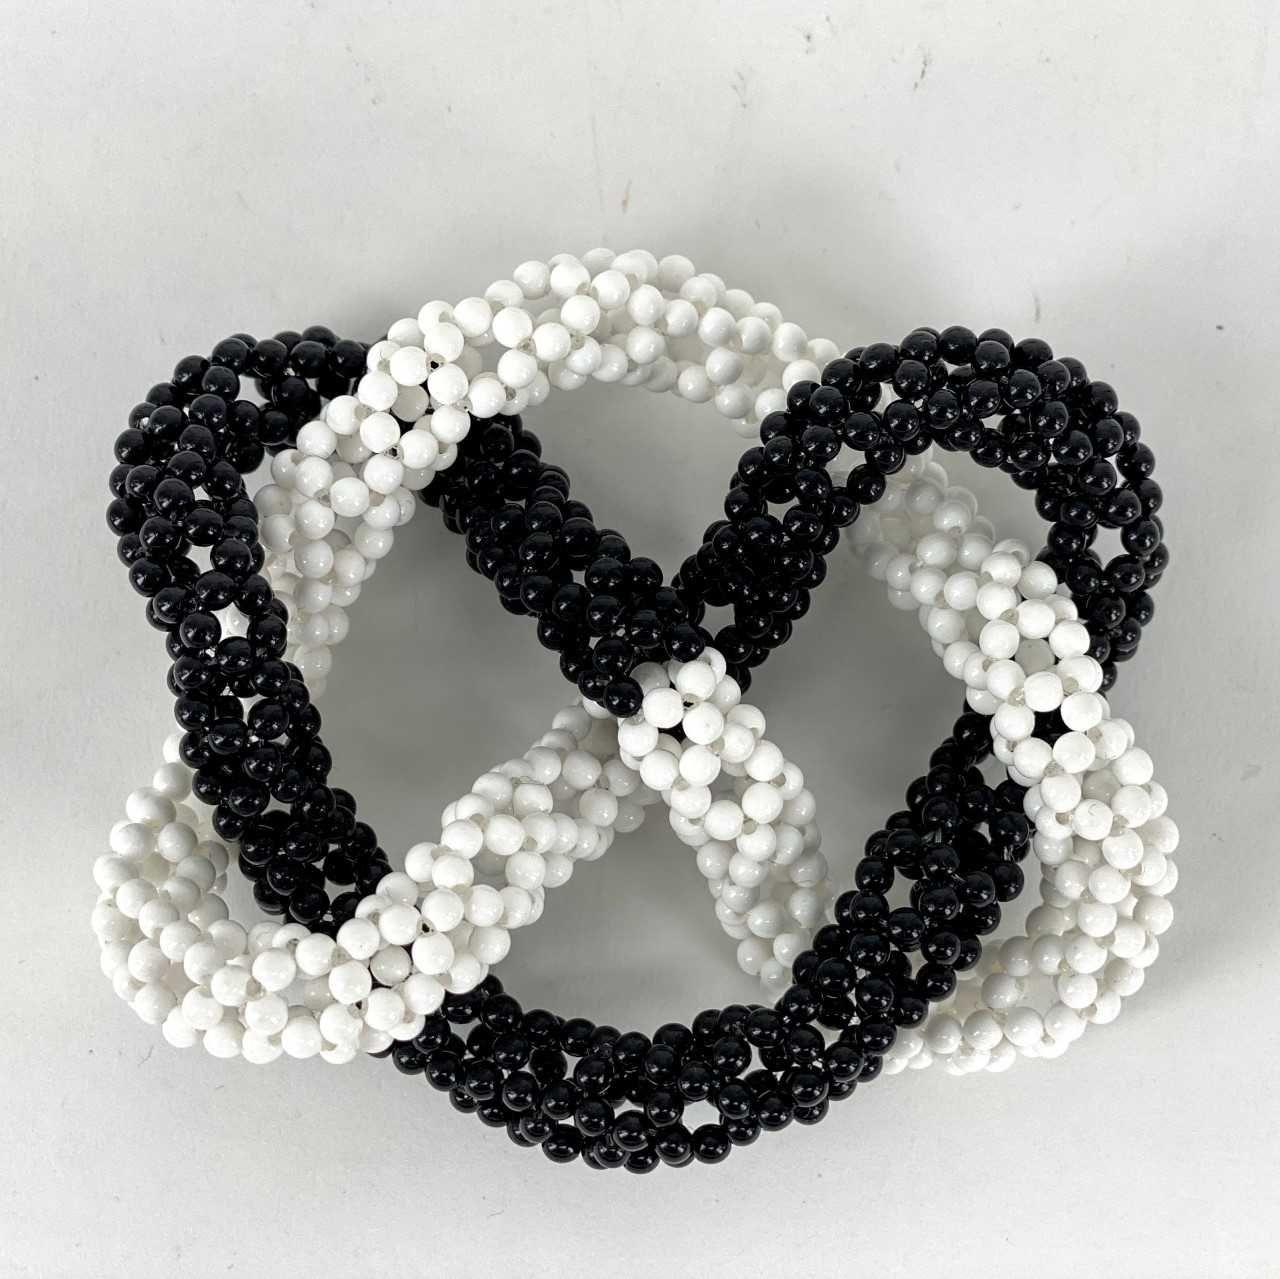 Image for entry 'Carbon nanotube 7 4 knot bead model'